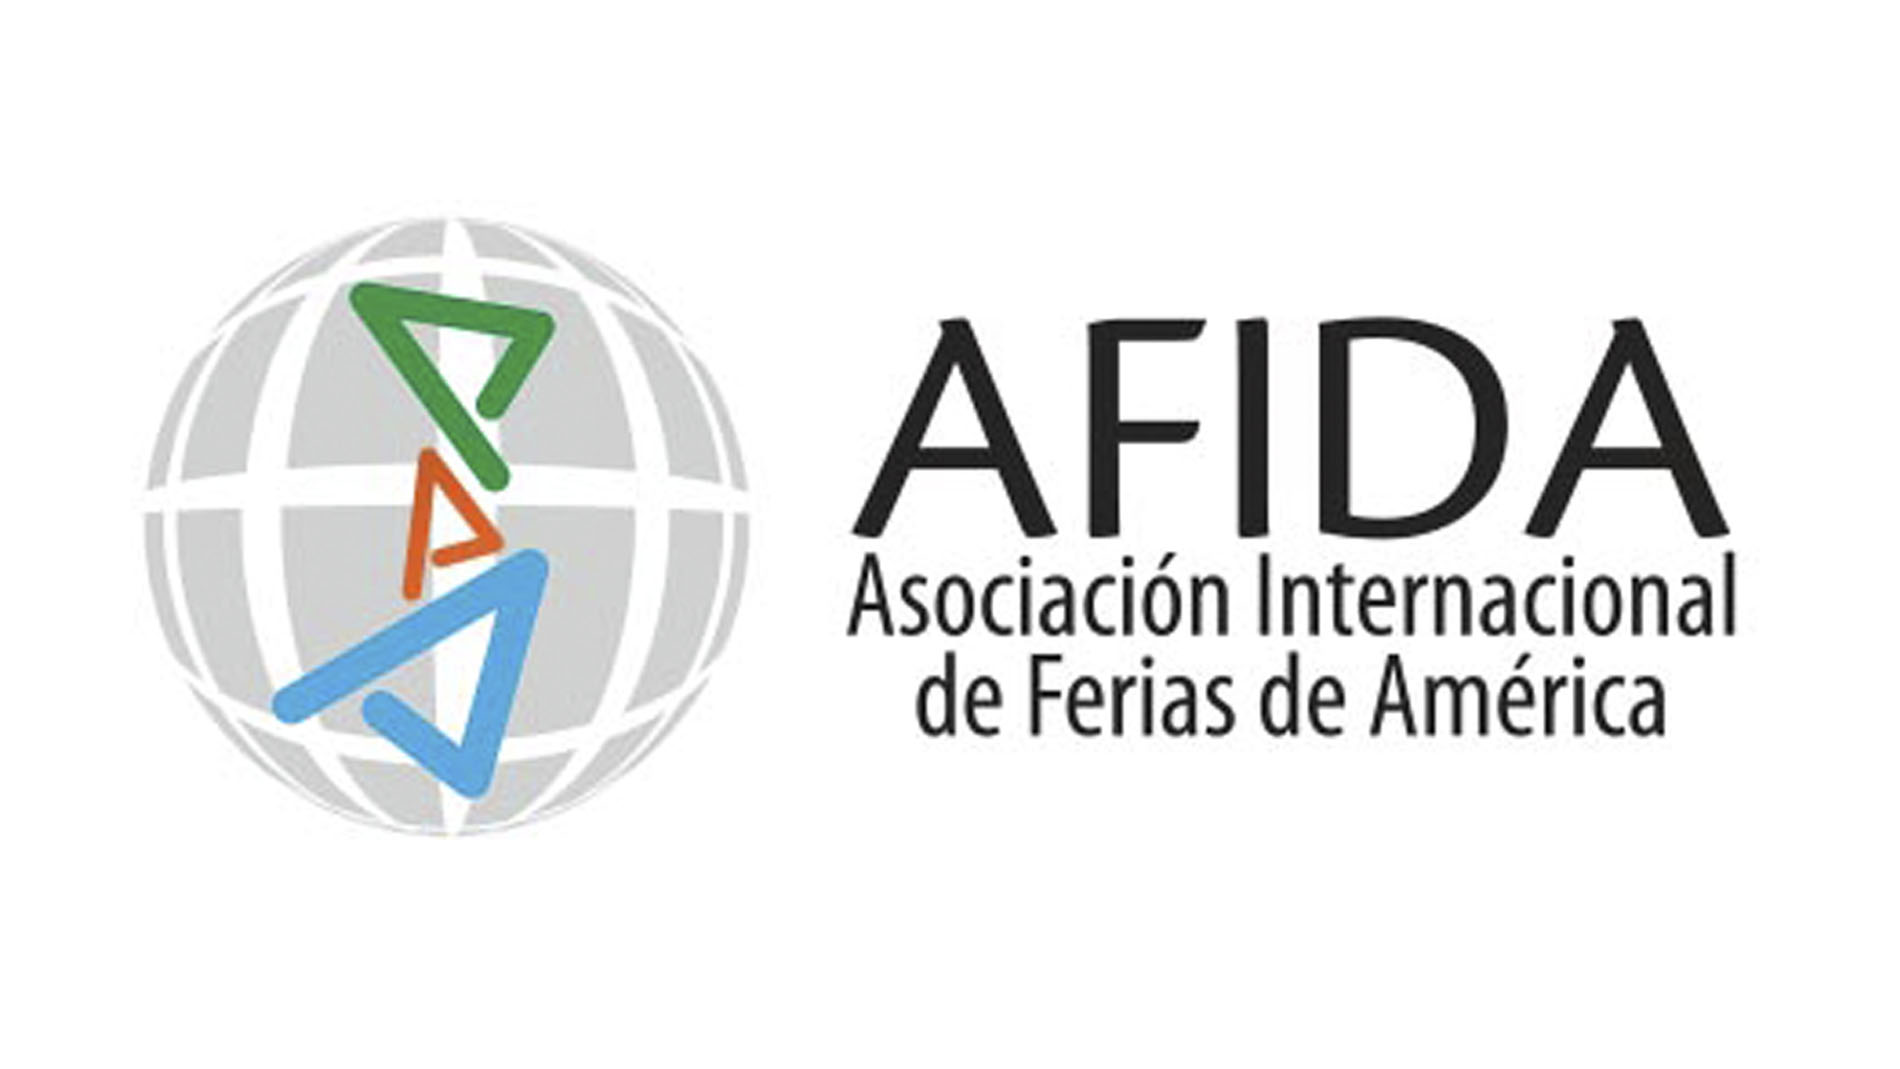 International Association of Trade Fairs of America